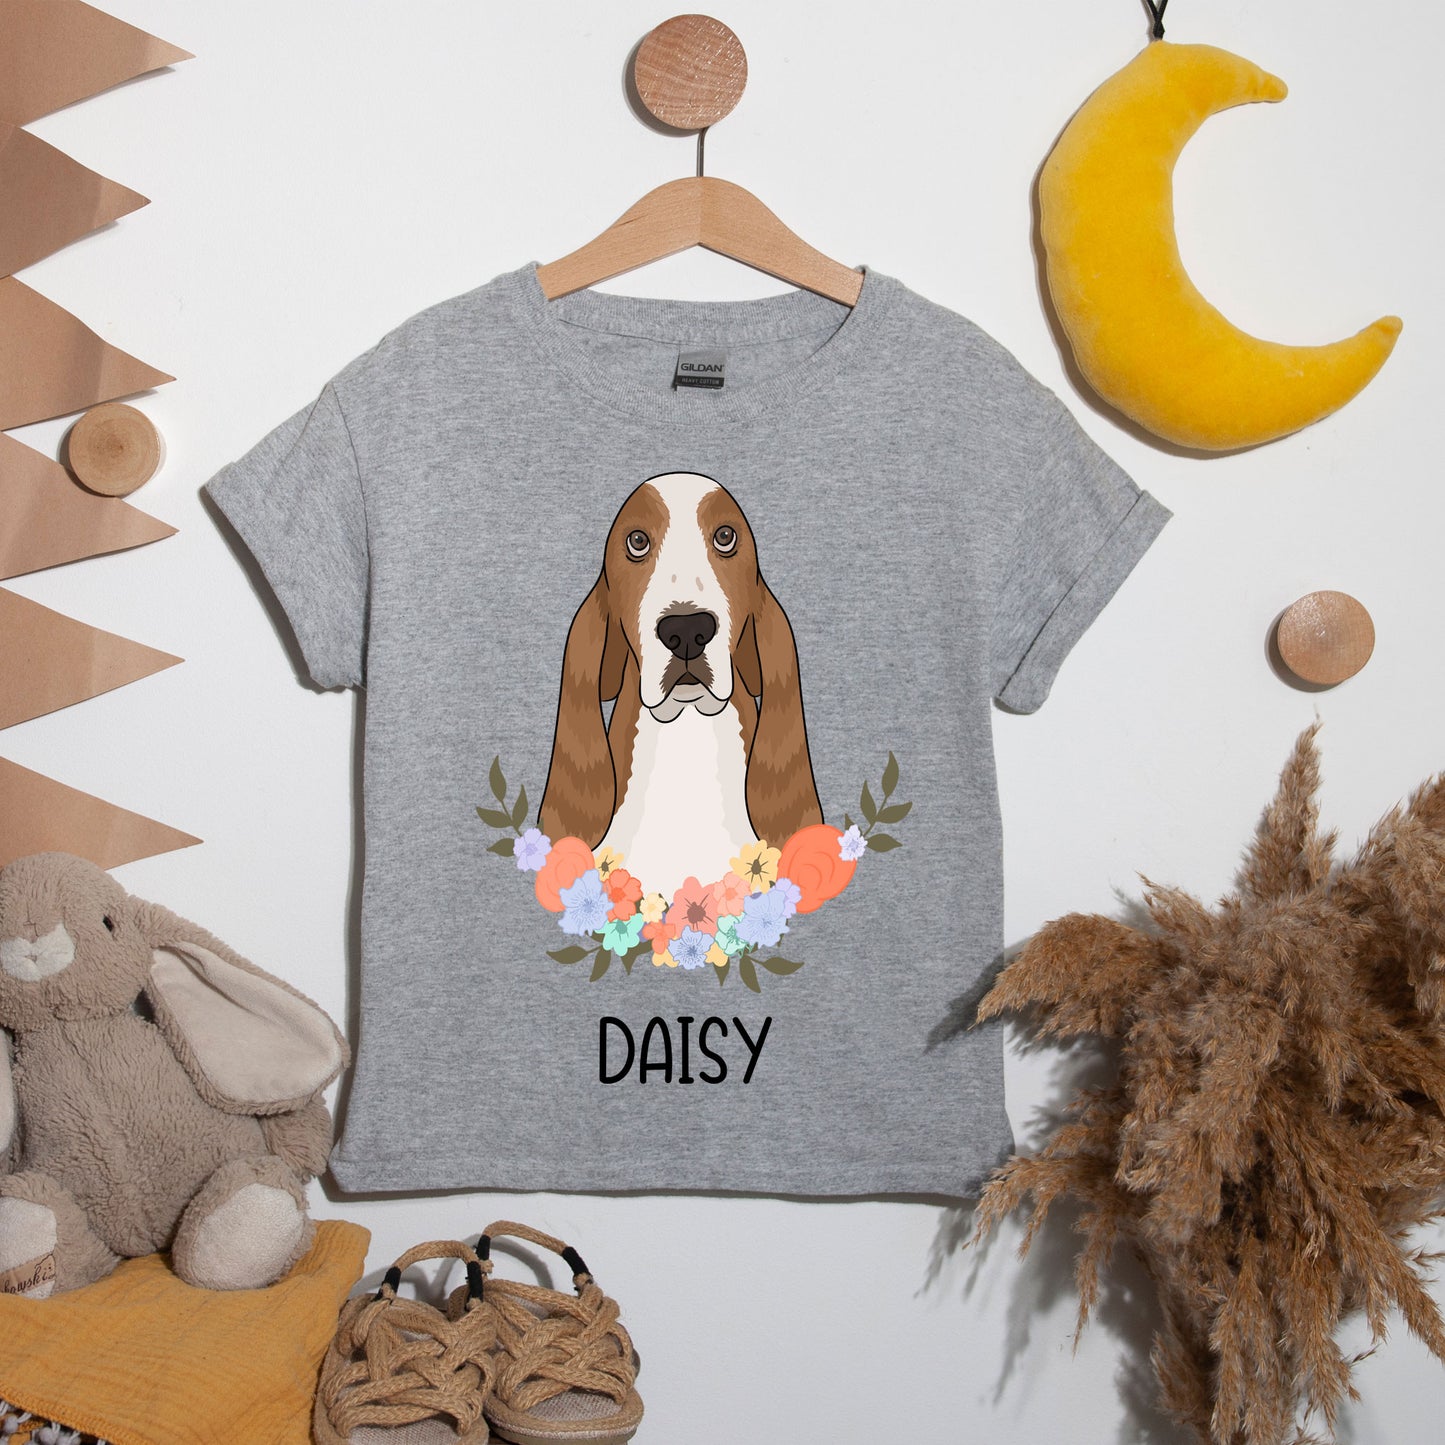 basset-hound-kids-t-shirt